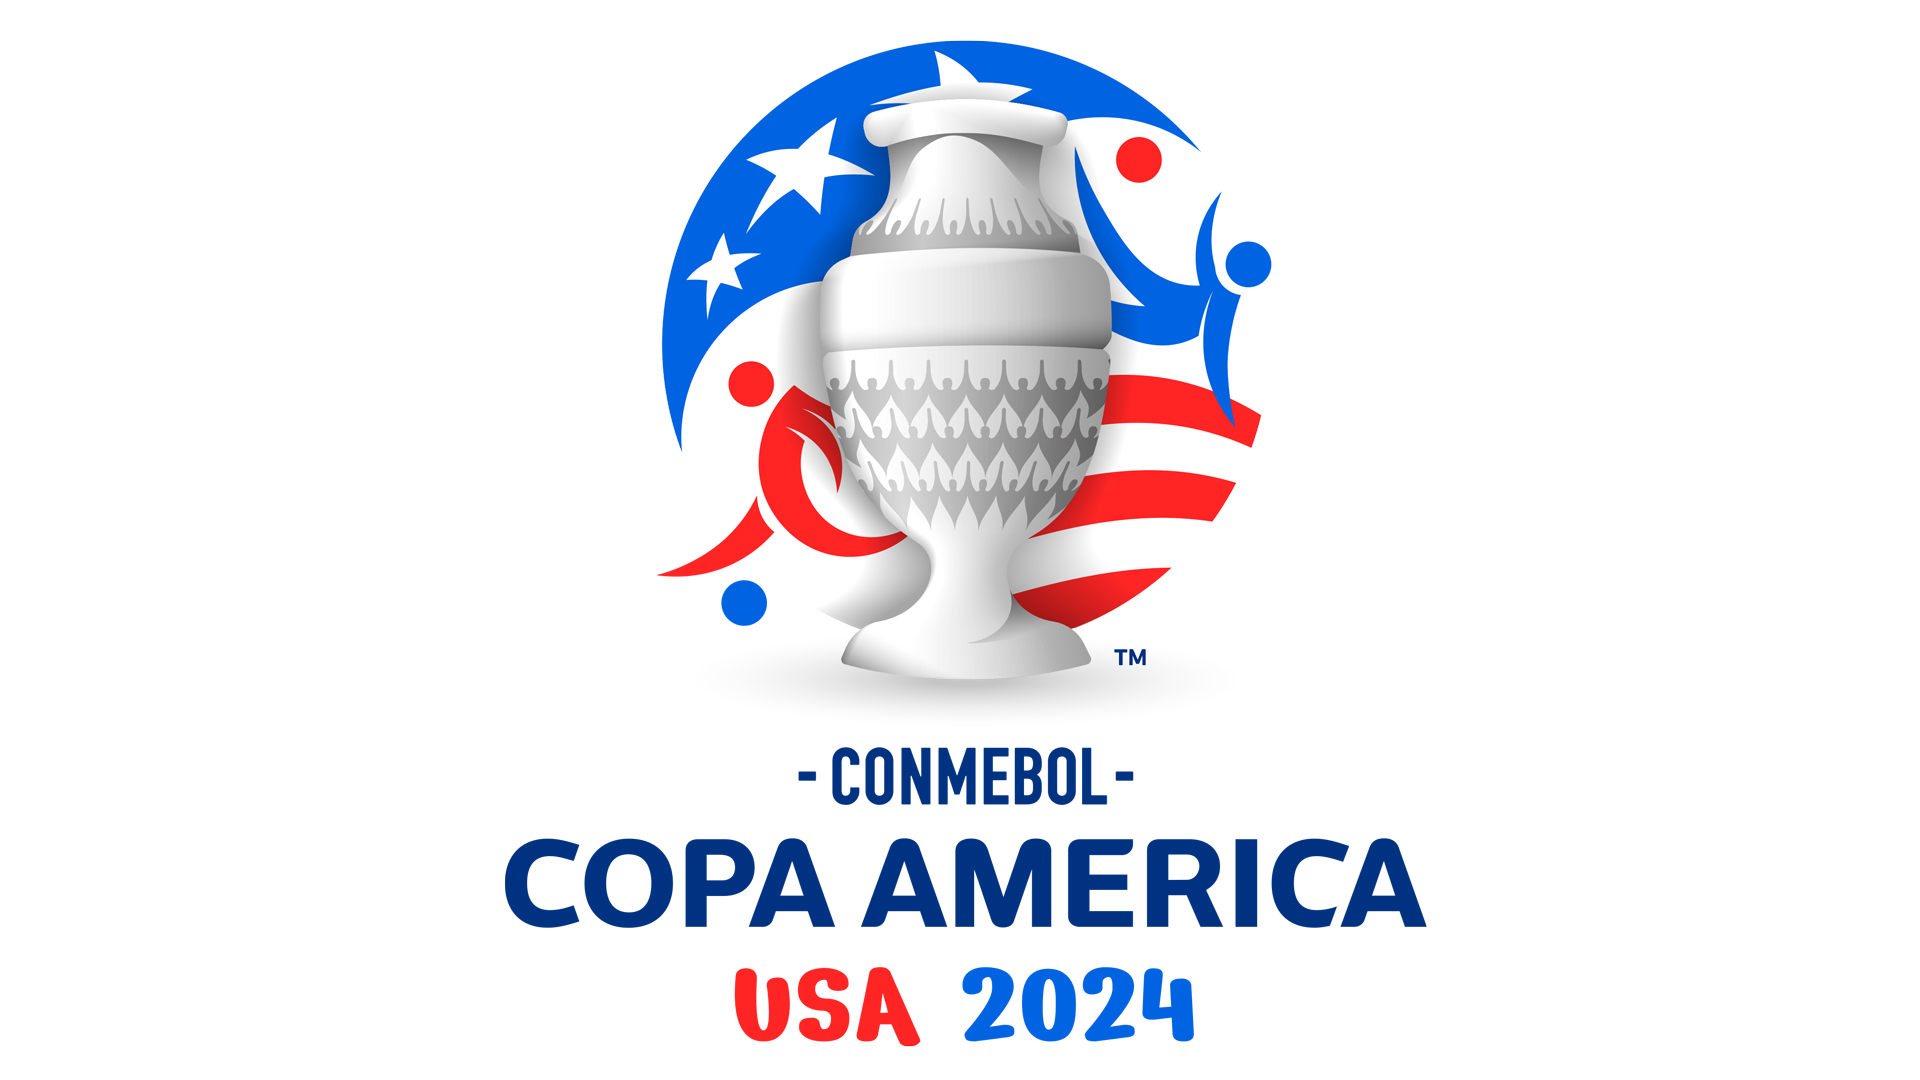 Copa America